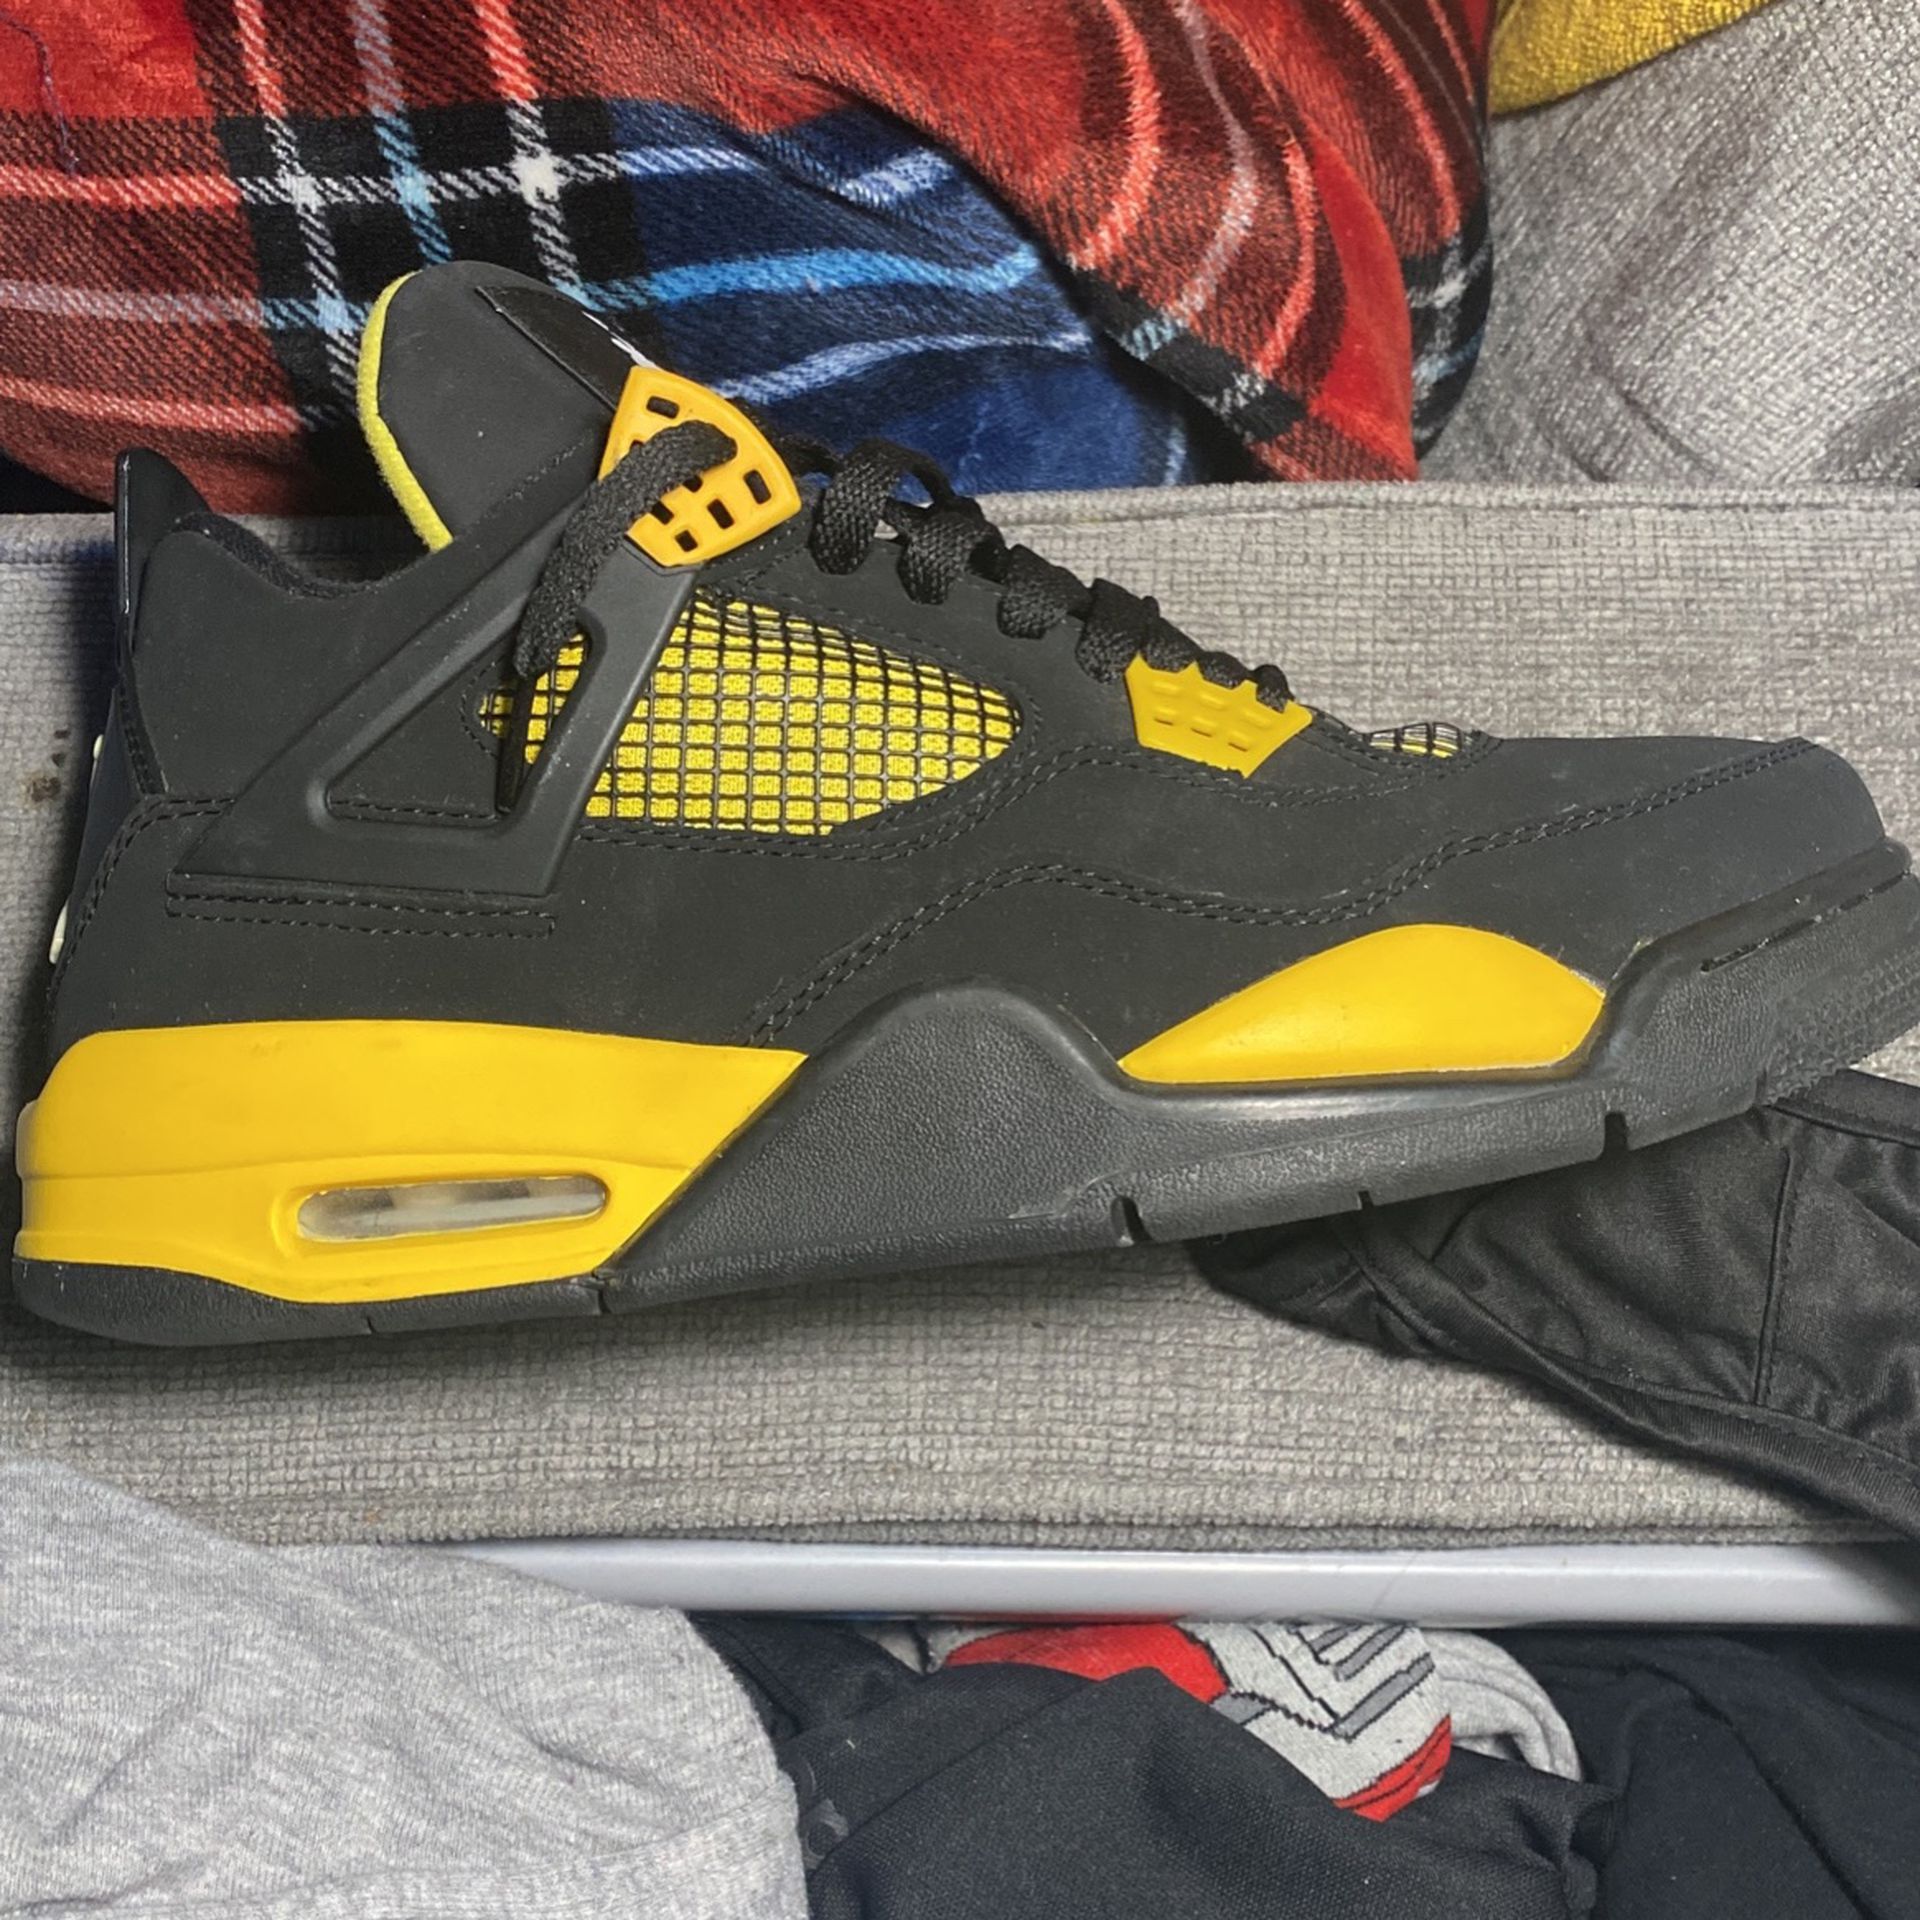 Jordans Black And Yellow